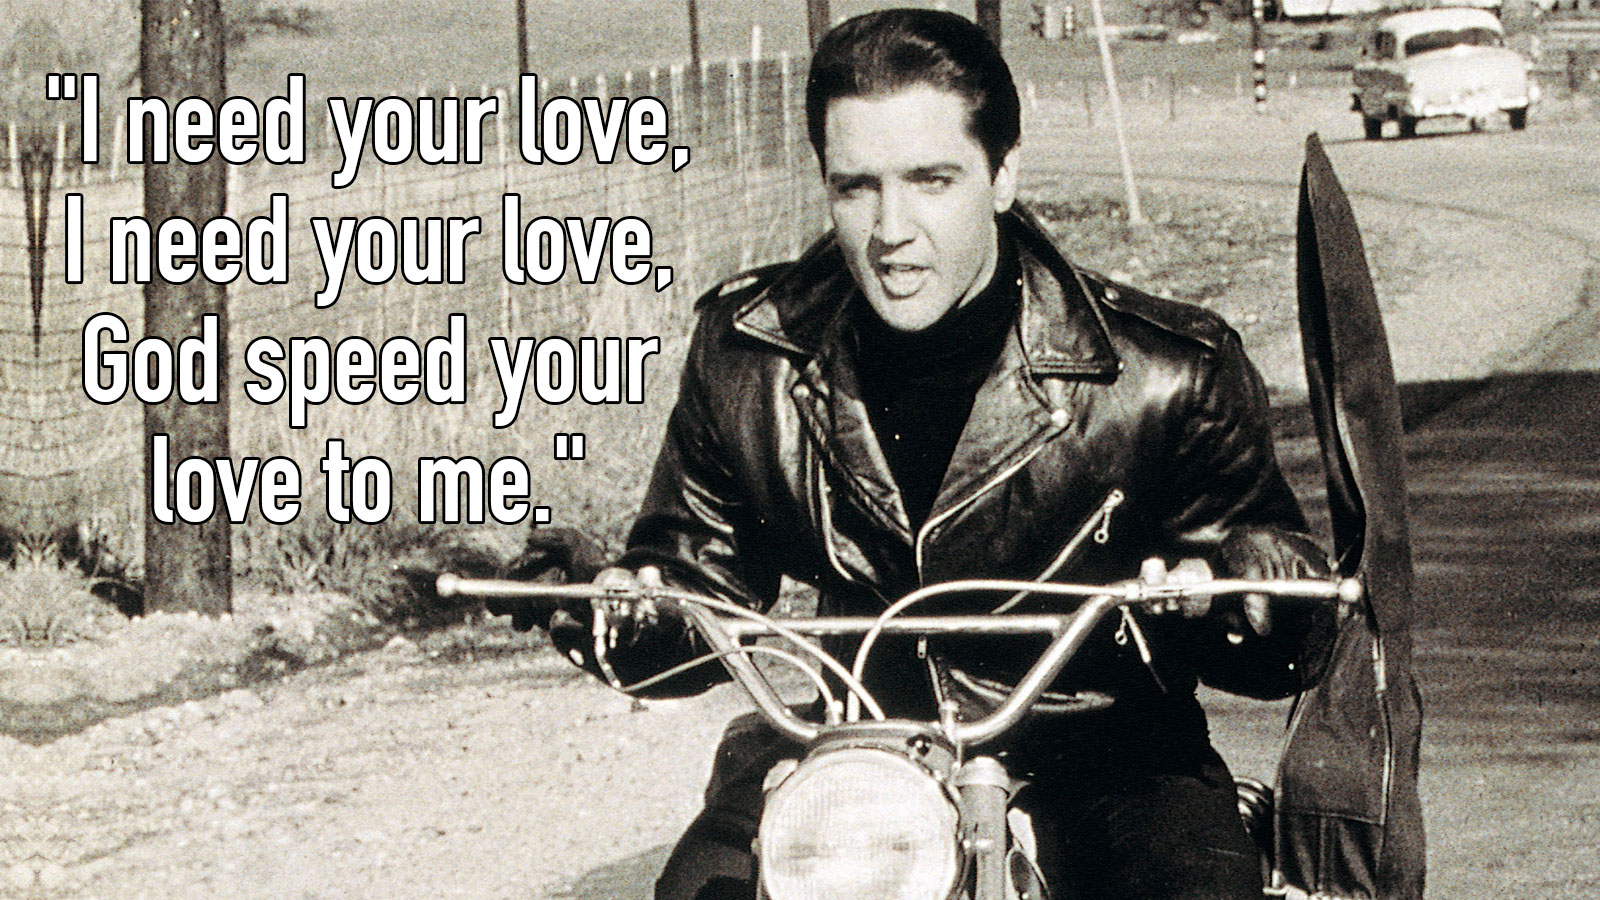 Love Song Lyrics for:I Need Your Love Tonight-Elvis Presley